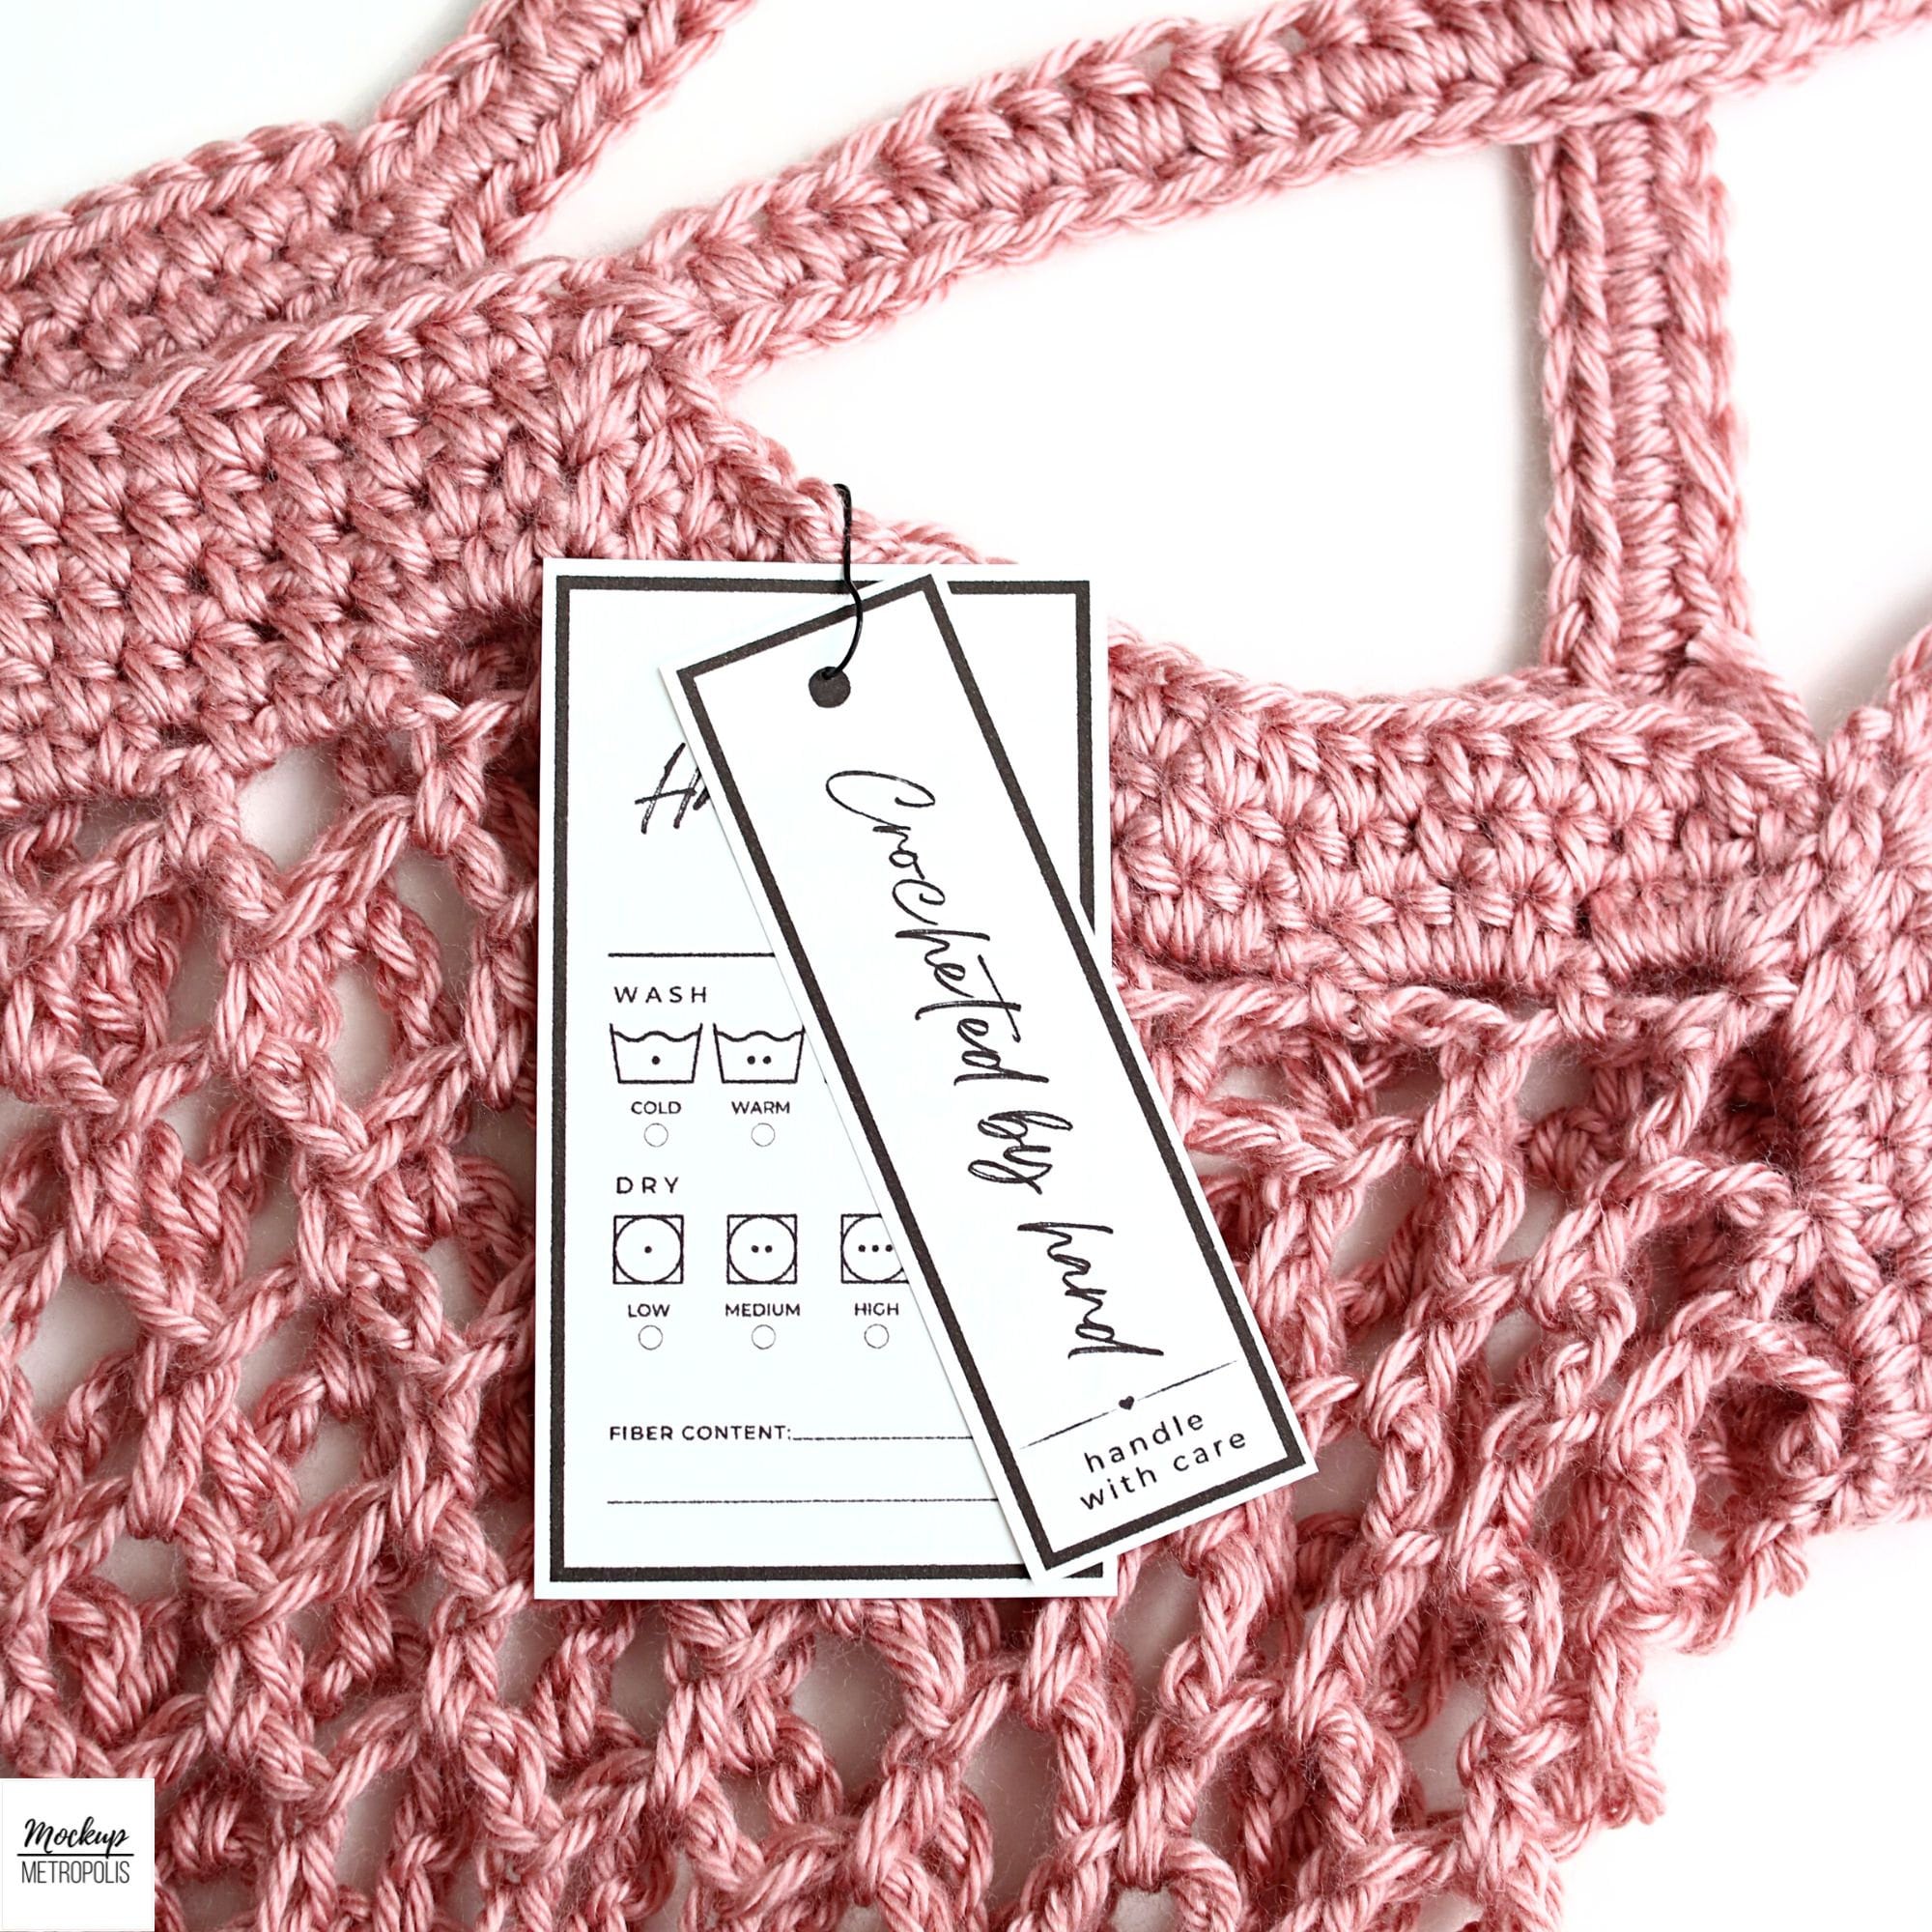 Tag for Handmade Item, Custom Leather Label, Handmade Crochet Tag, Cra –  Henry Design Studio